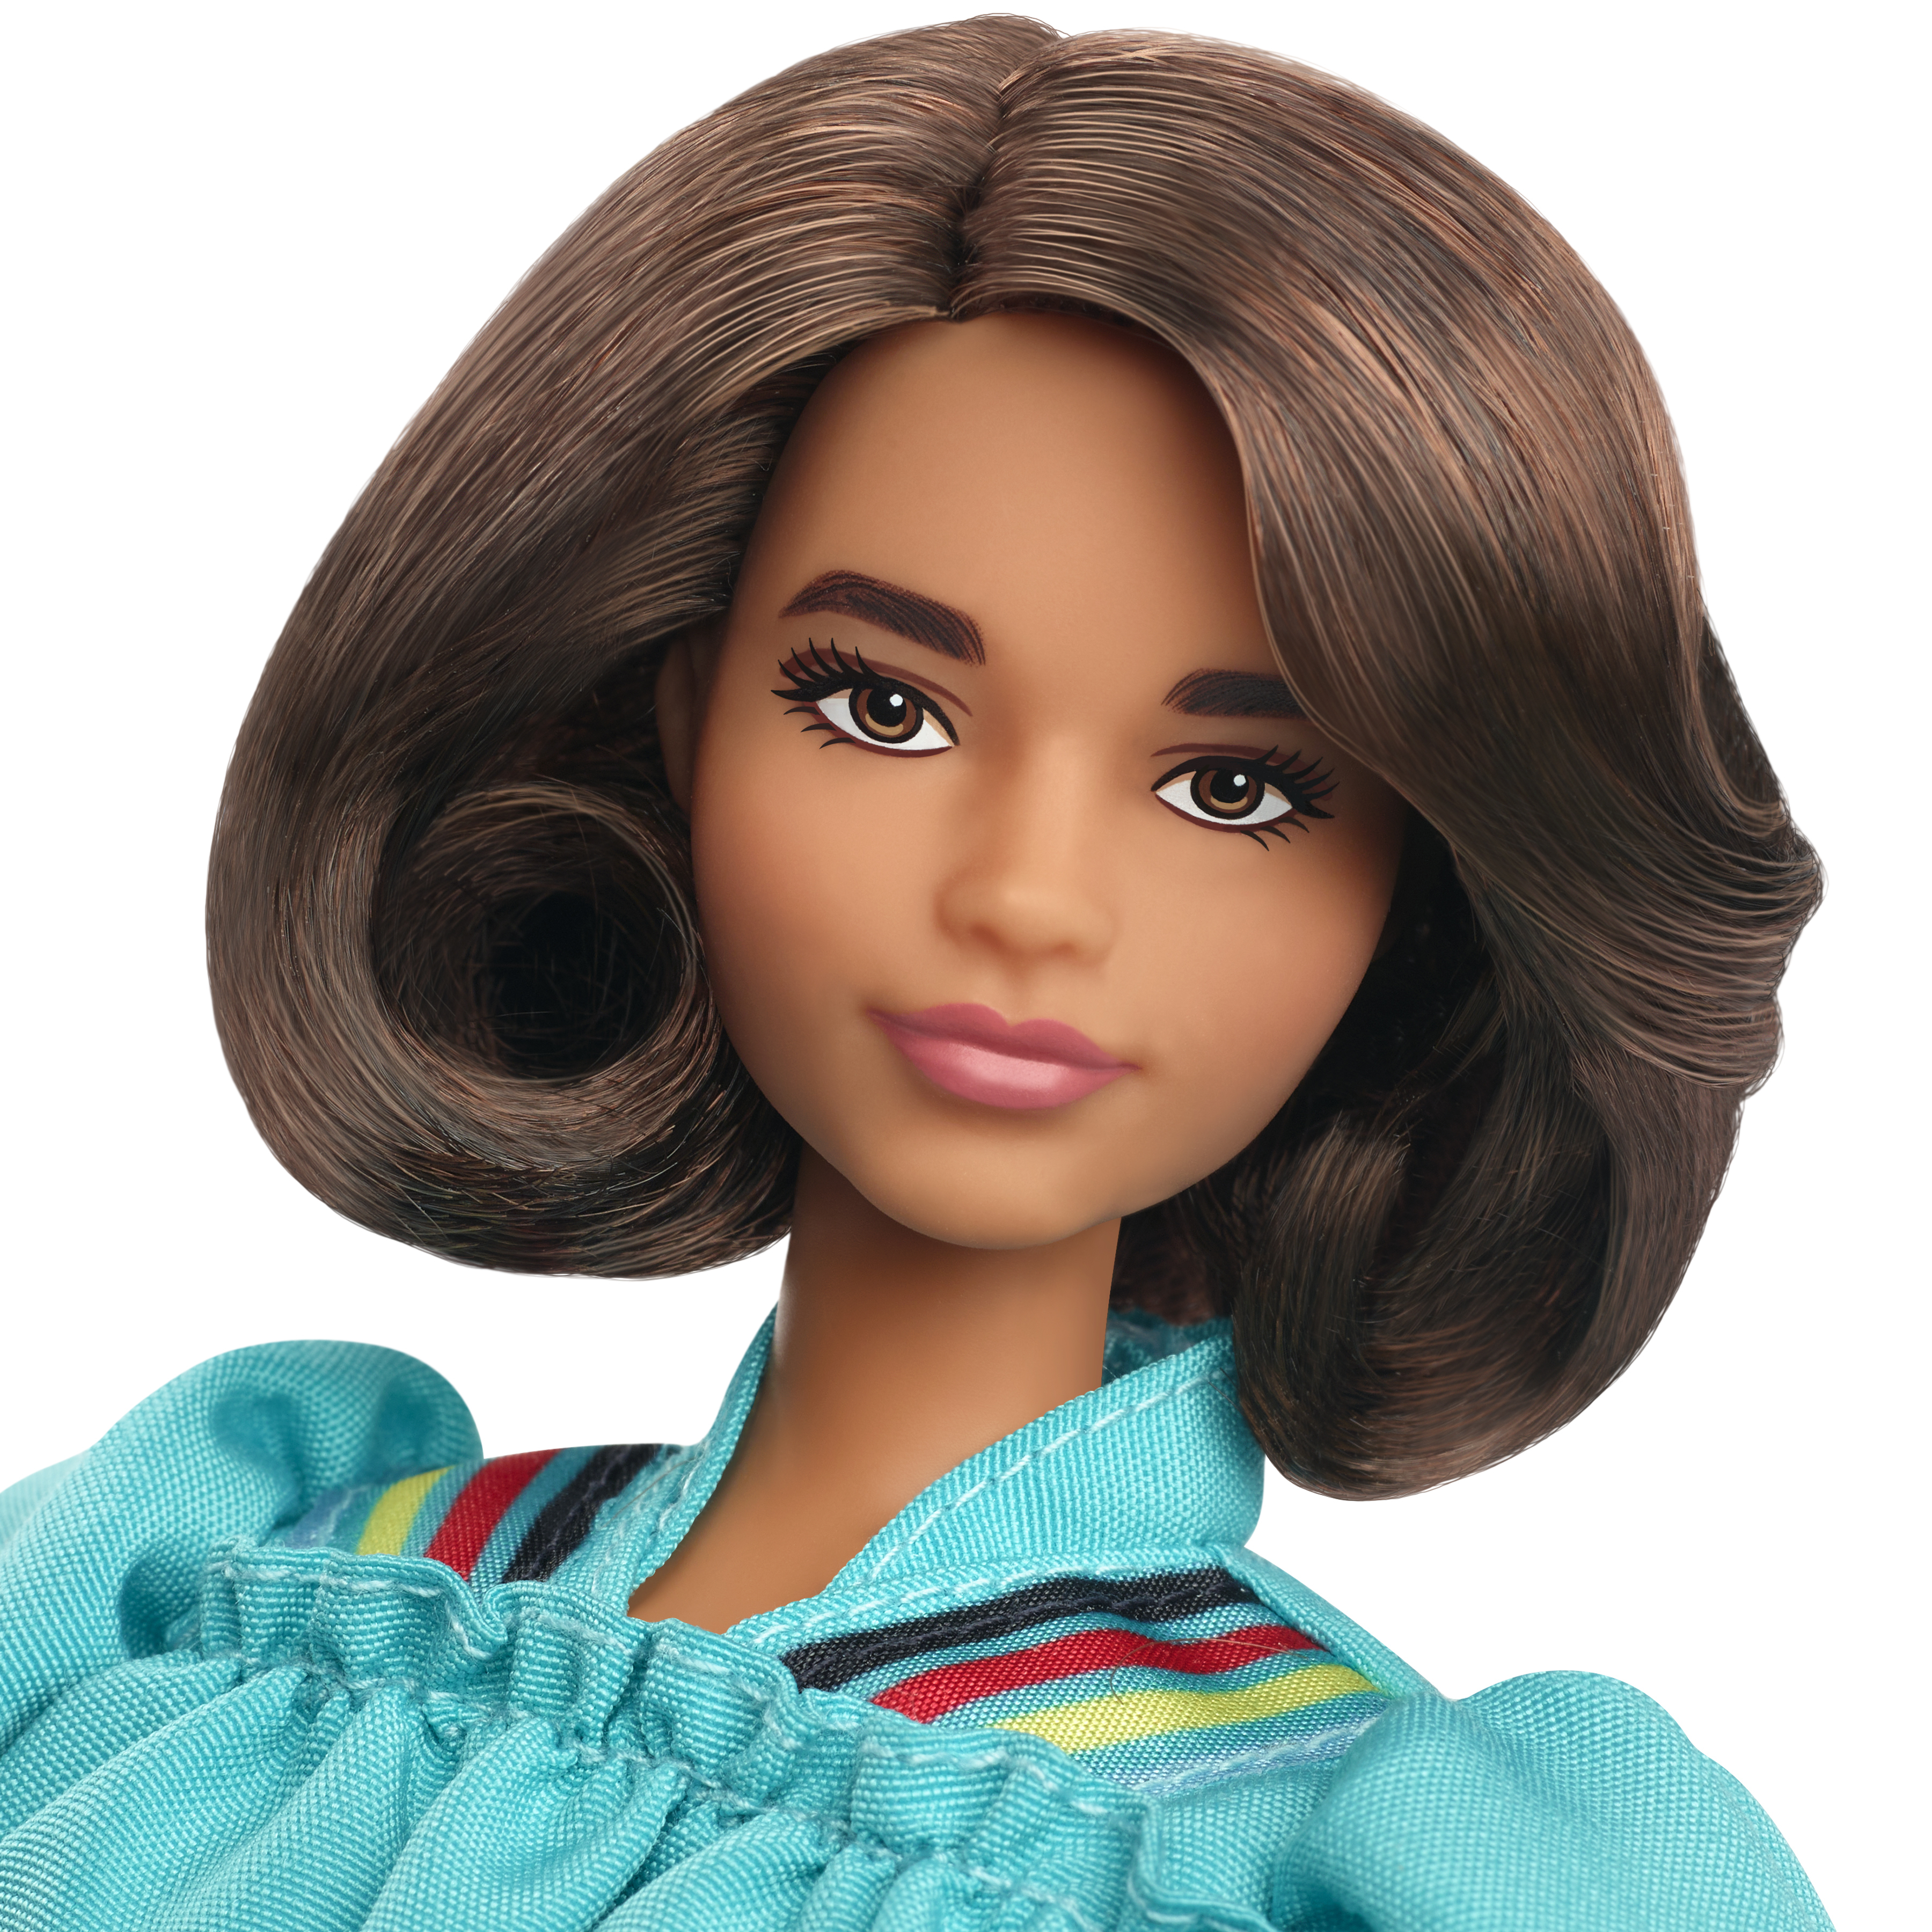 Barbie doll honoring Cherokee Nation leader met with mixed